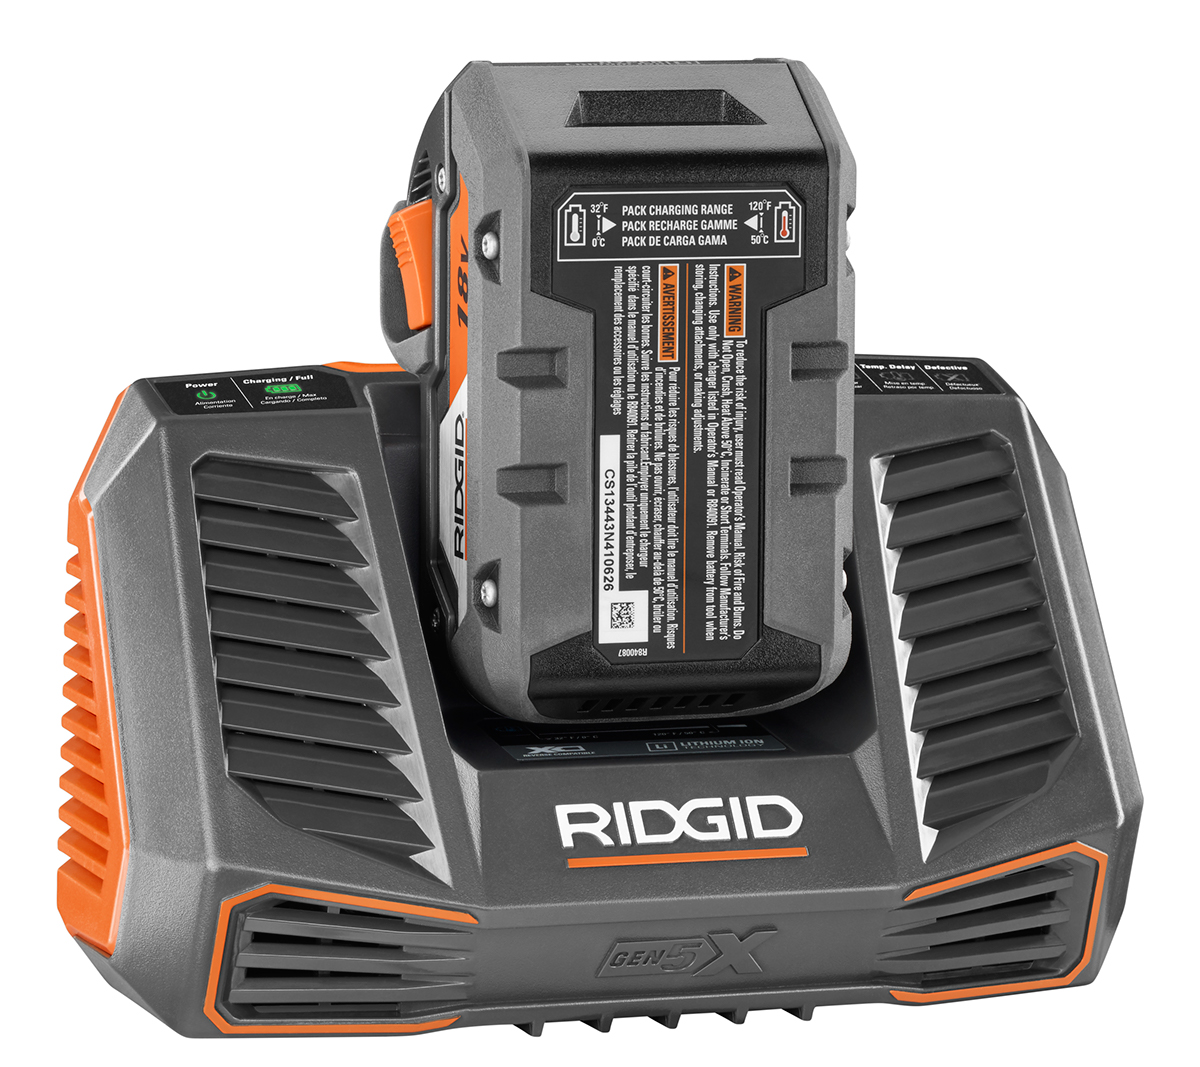 Ridgid charger battery tools Powertools design strategy